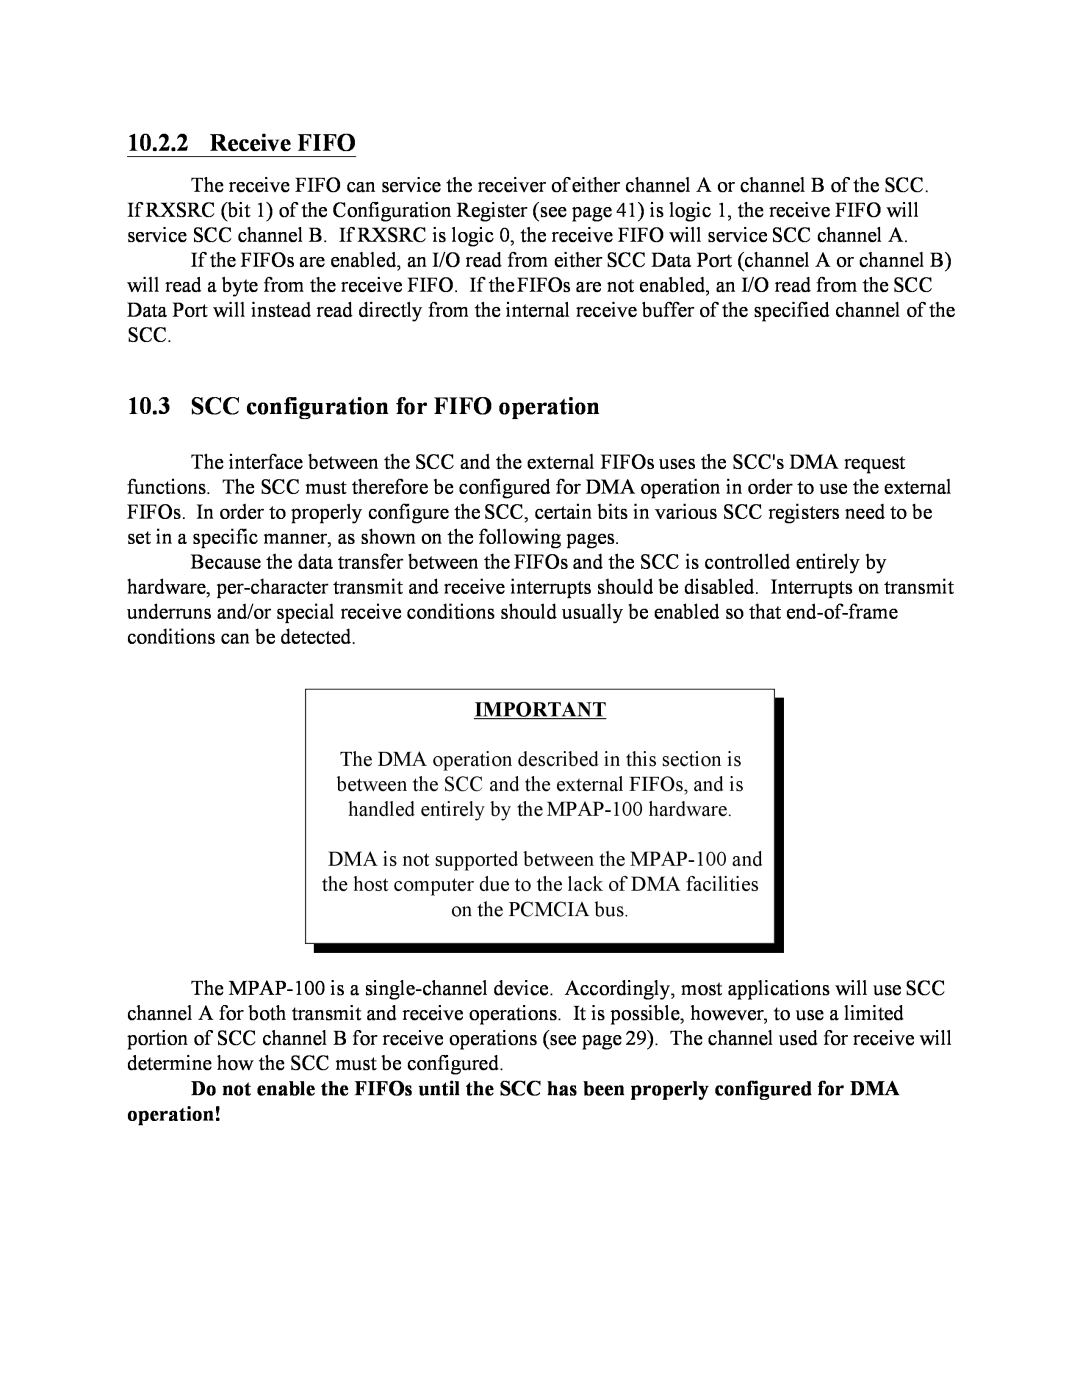 Quatech MPAP-100 user manual Receive FIFO, SCC configuration for FIFO operation 